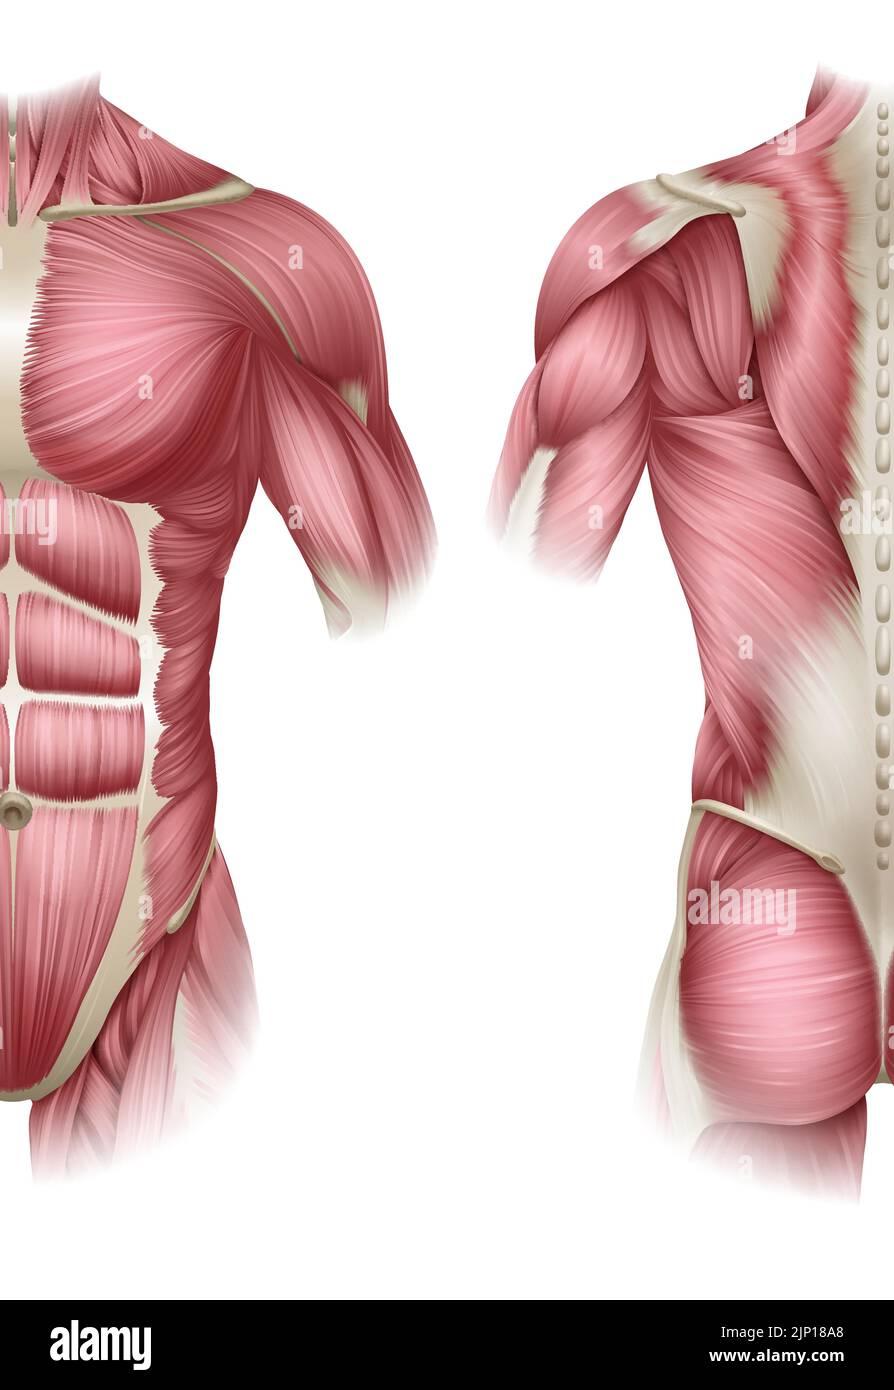 Human Body Trunk Muscles Anatomy Illustration Stock Vector